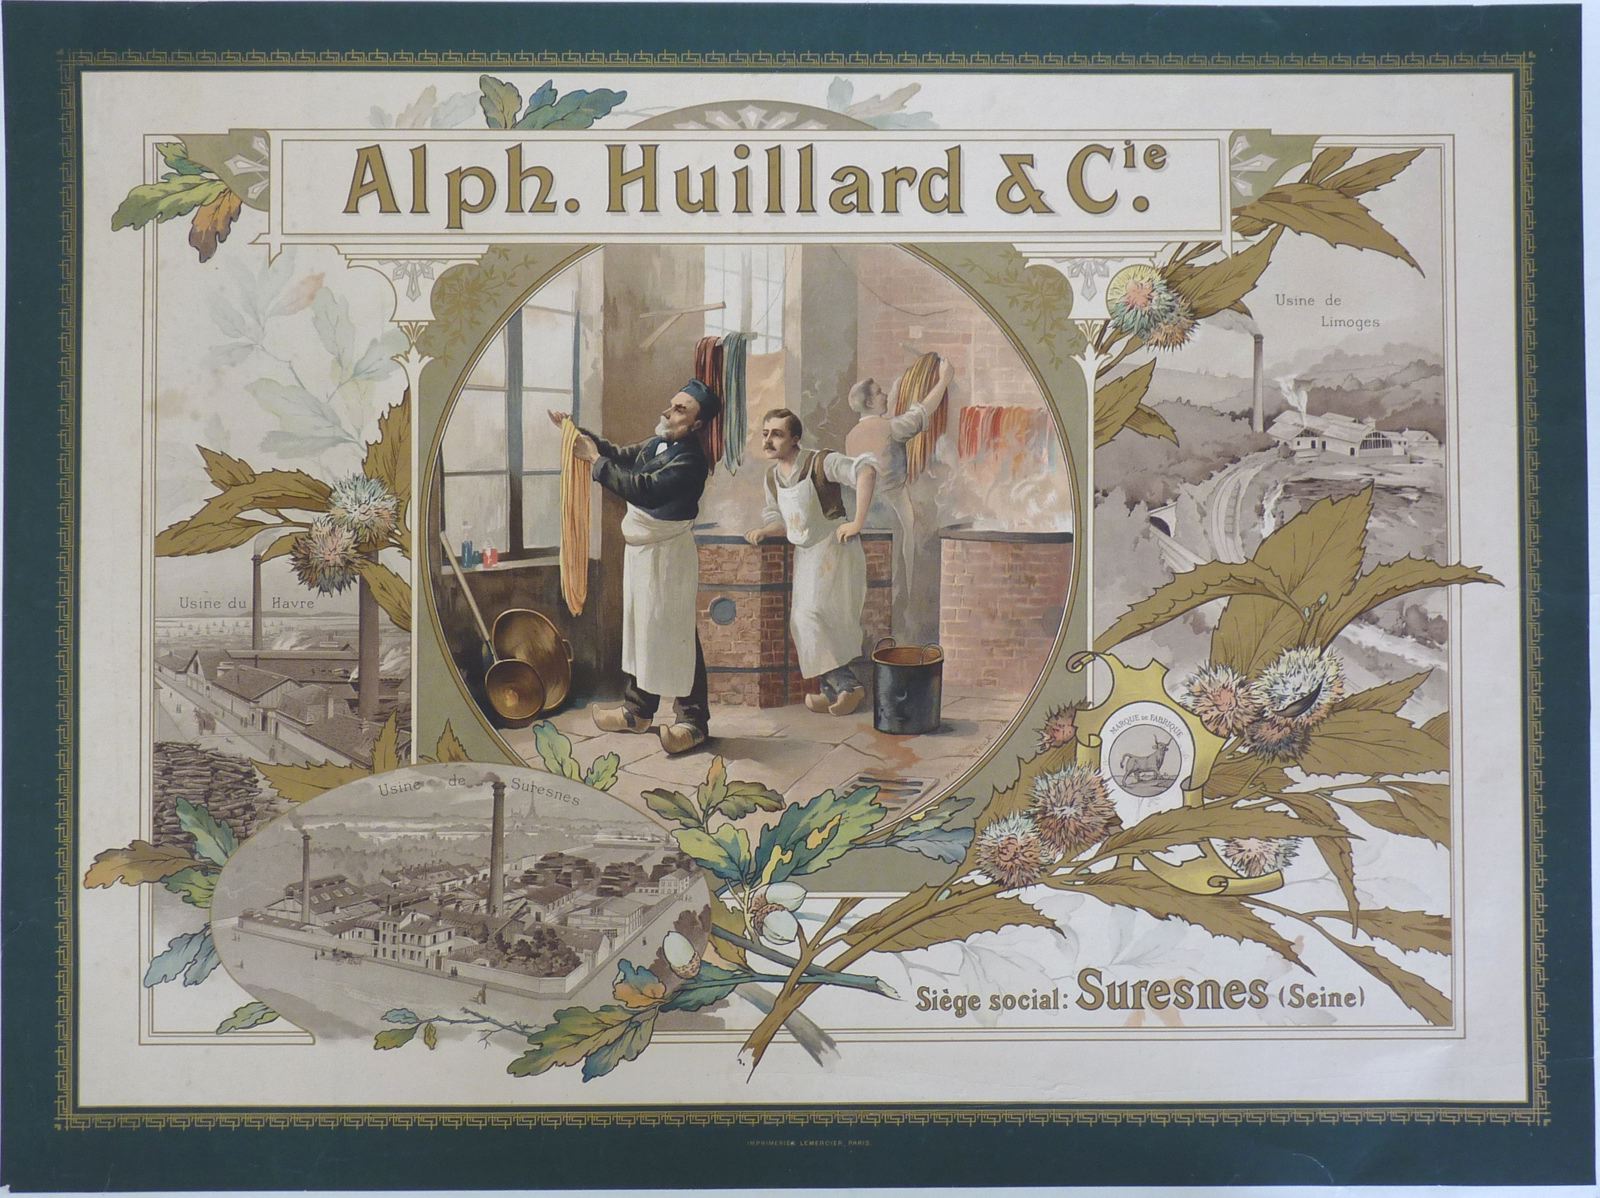 Alph. Huillard & Cie